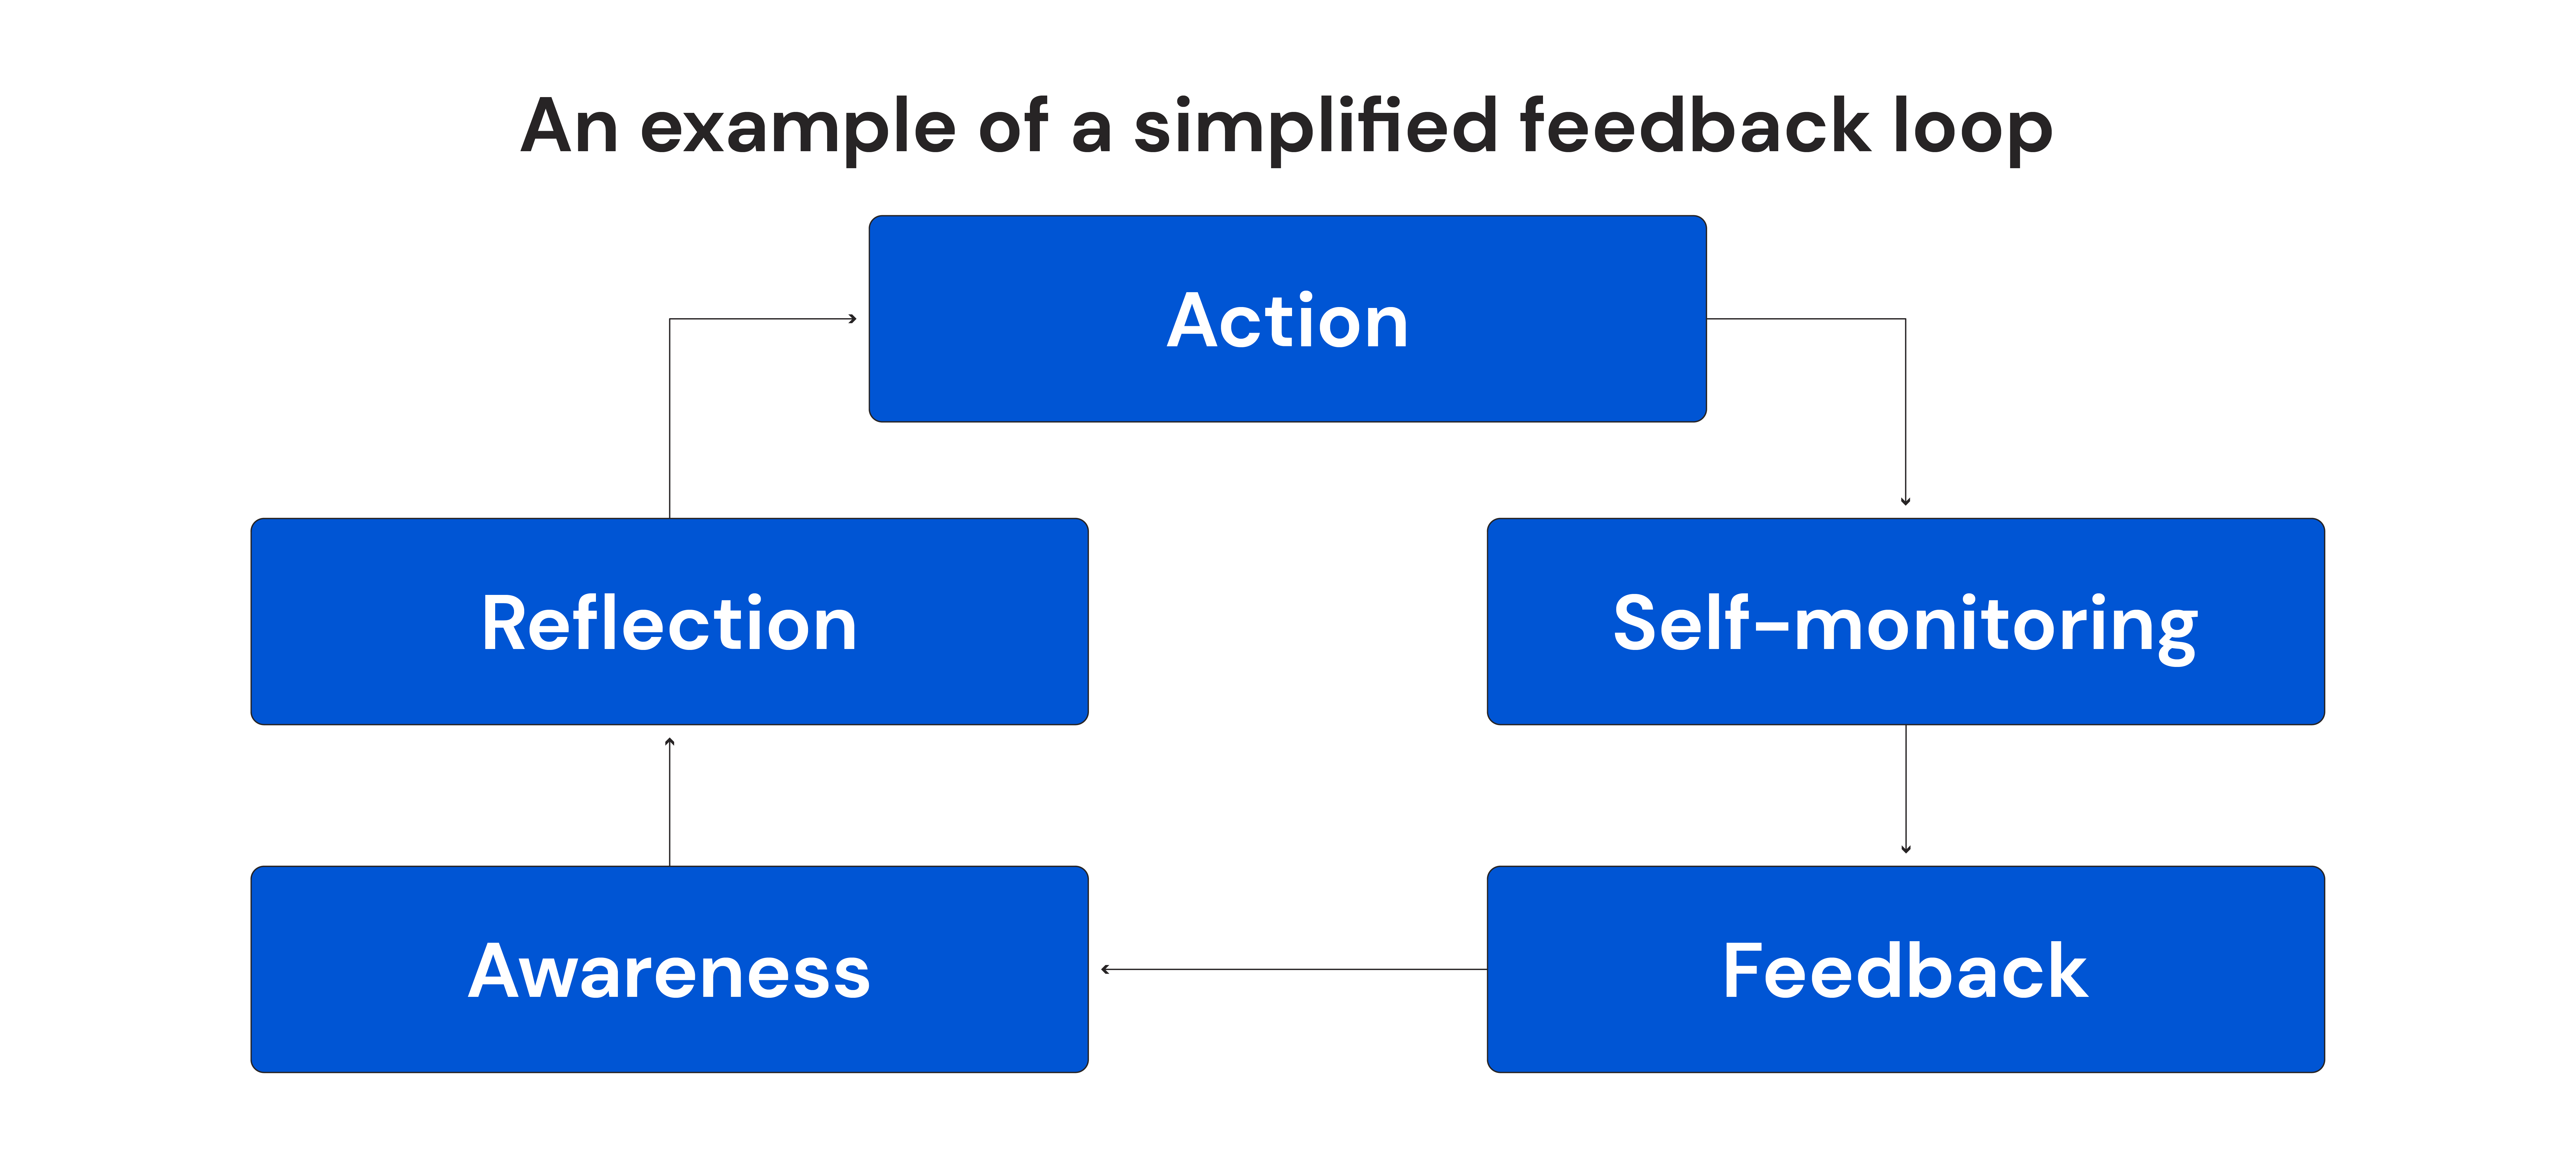 An example of a simplified feedback loop